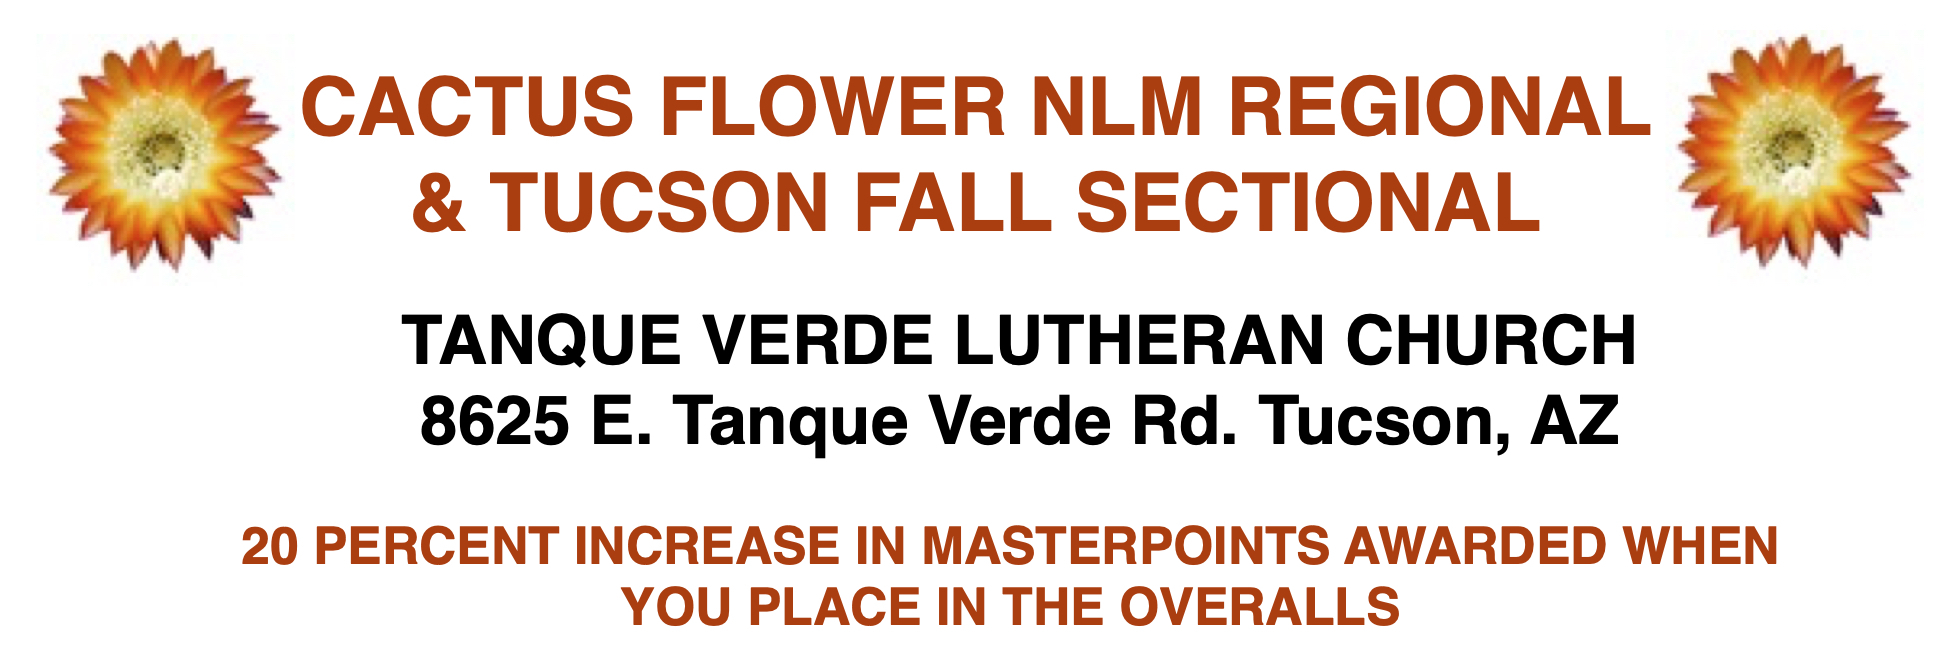 Cactus Flower NLM Regional/Fall Sectional Nov. 17-19